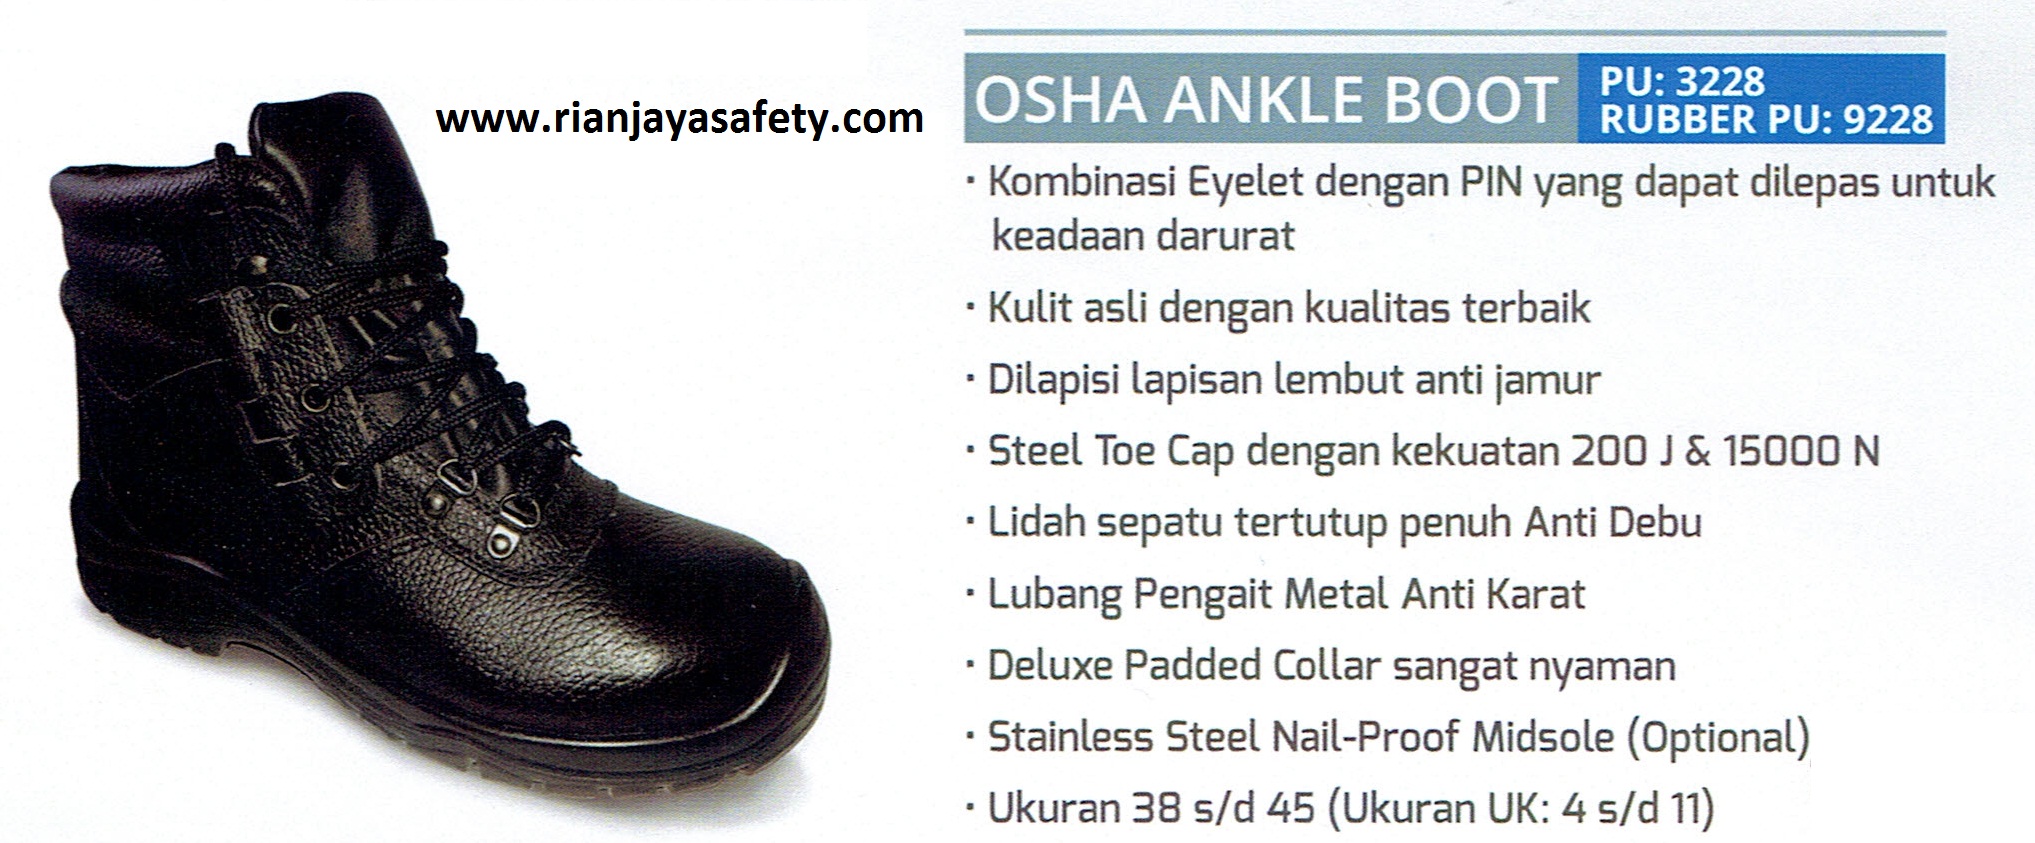 Manfaat Sepatu Ankle Boot Safety?